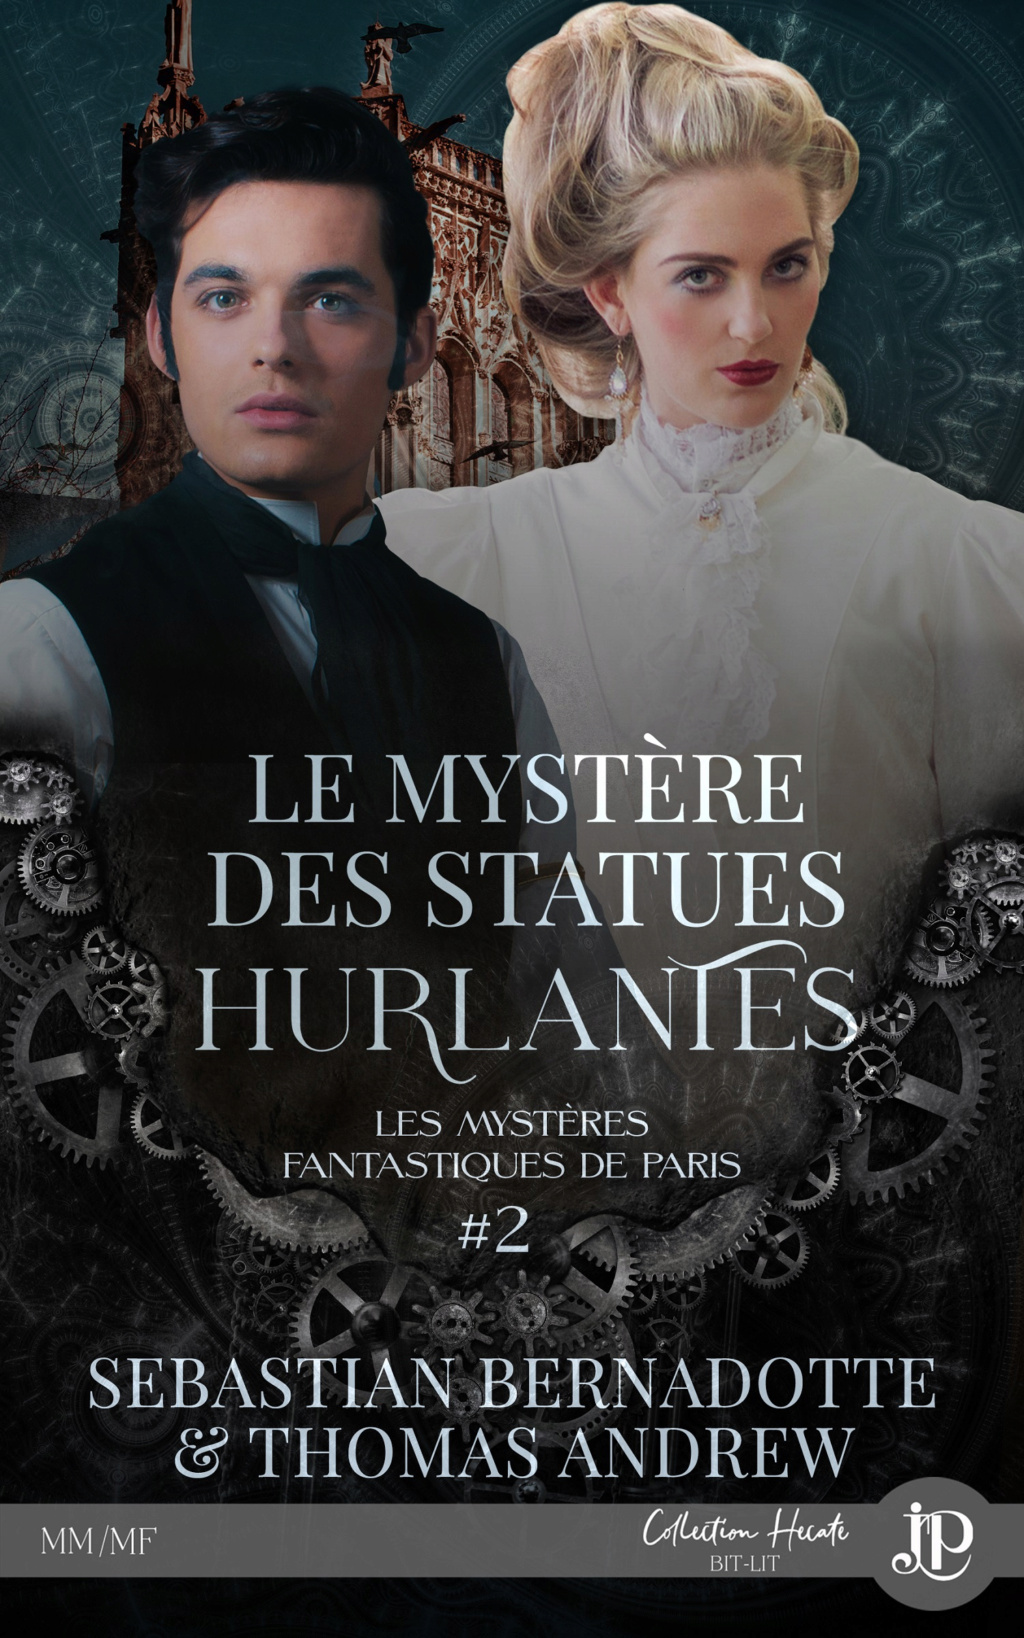 Les mystères fantastiques de Paris - Tome 2 : Le mystère des statues hurlantes de Thomas Andrew & Sebastian Bernadotte 3444ef10